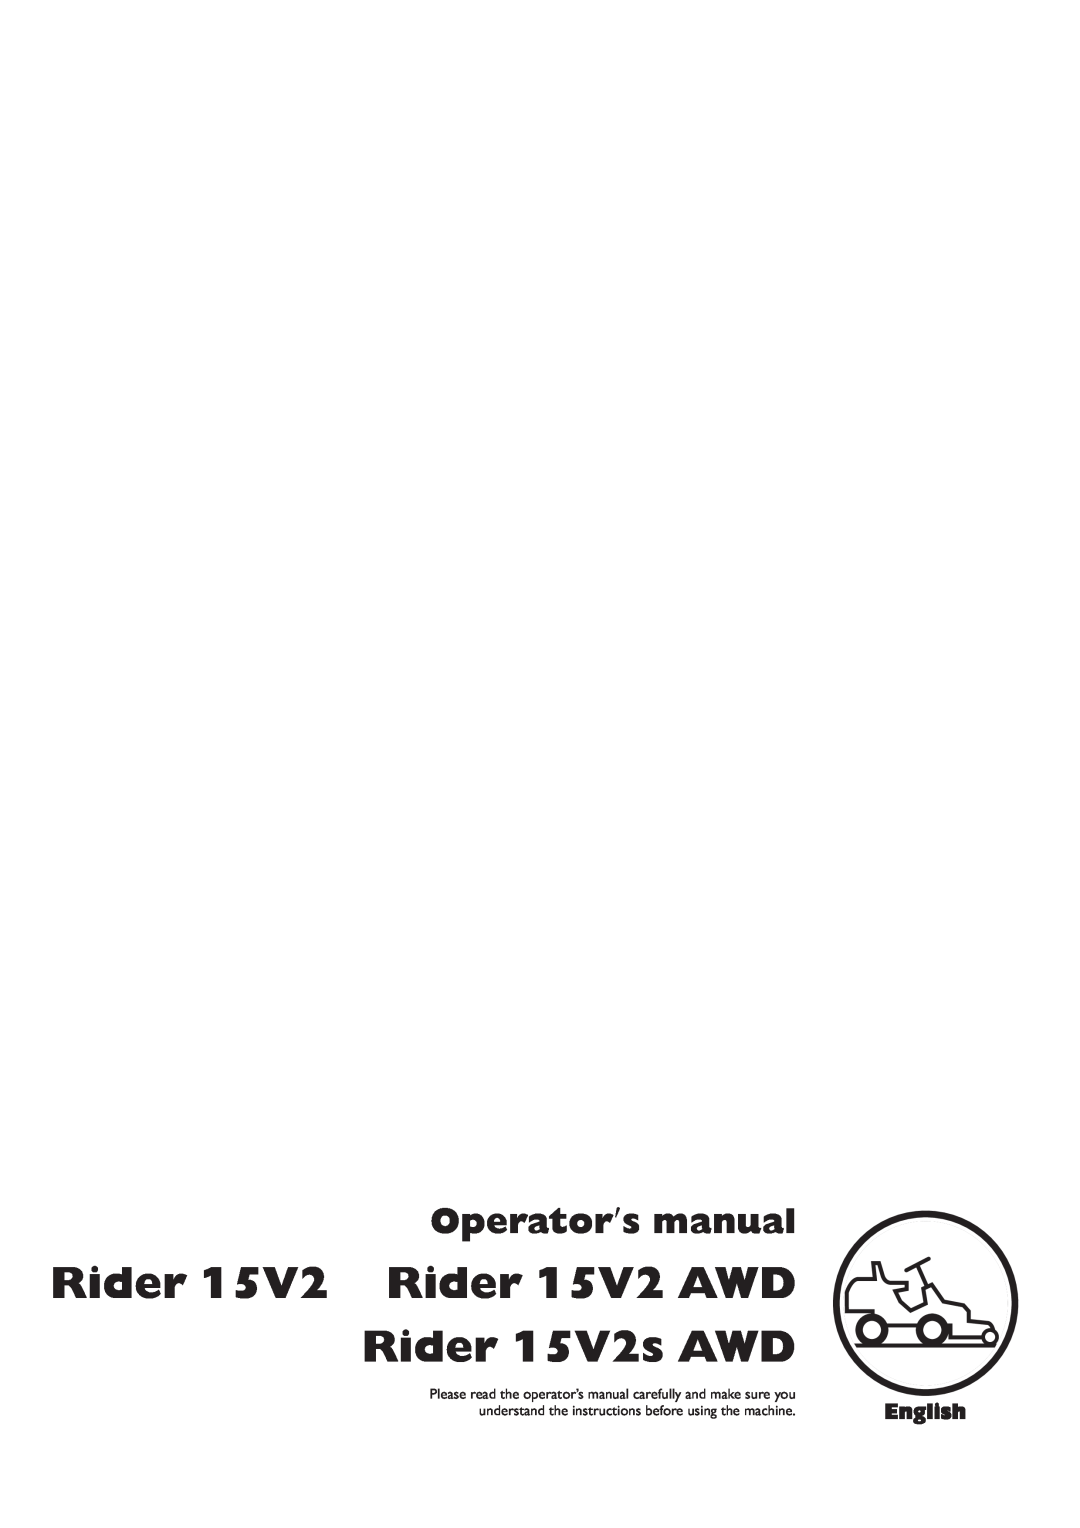 Husqvarna manual English, Rider 15V2 Rider 15V2 AWD Rider 15V2s AWD, Operator′s manual 